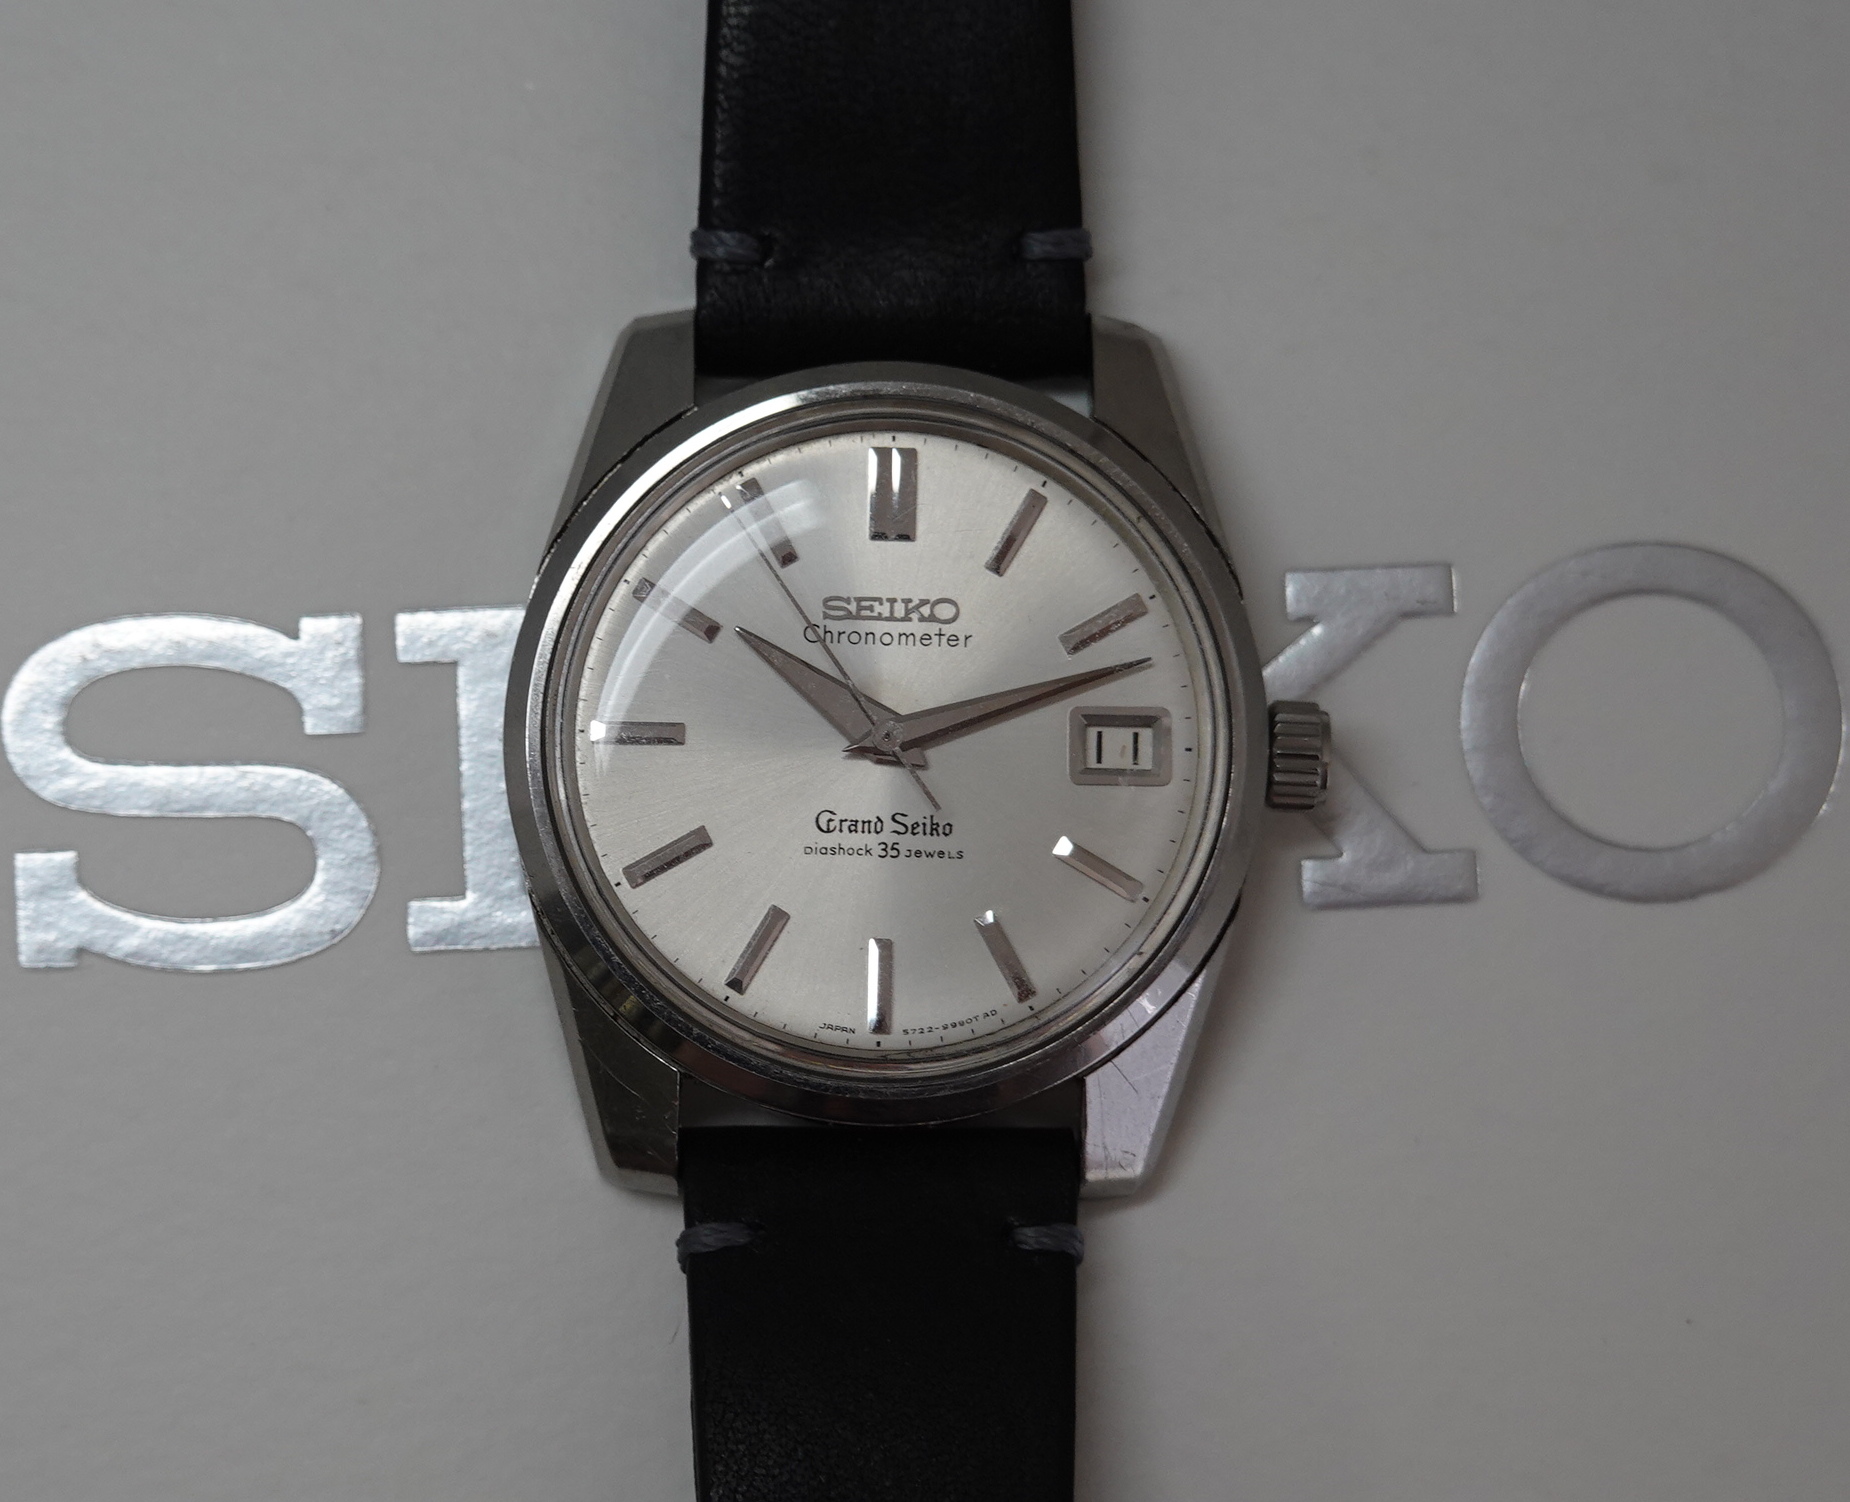 SOLD 1965 Grand Seiko 57GS 5722-9990 Chronometer - Birth Year Watches